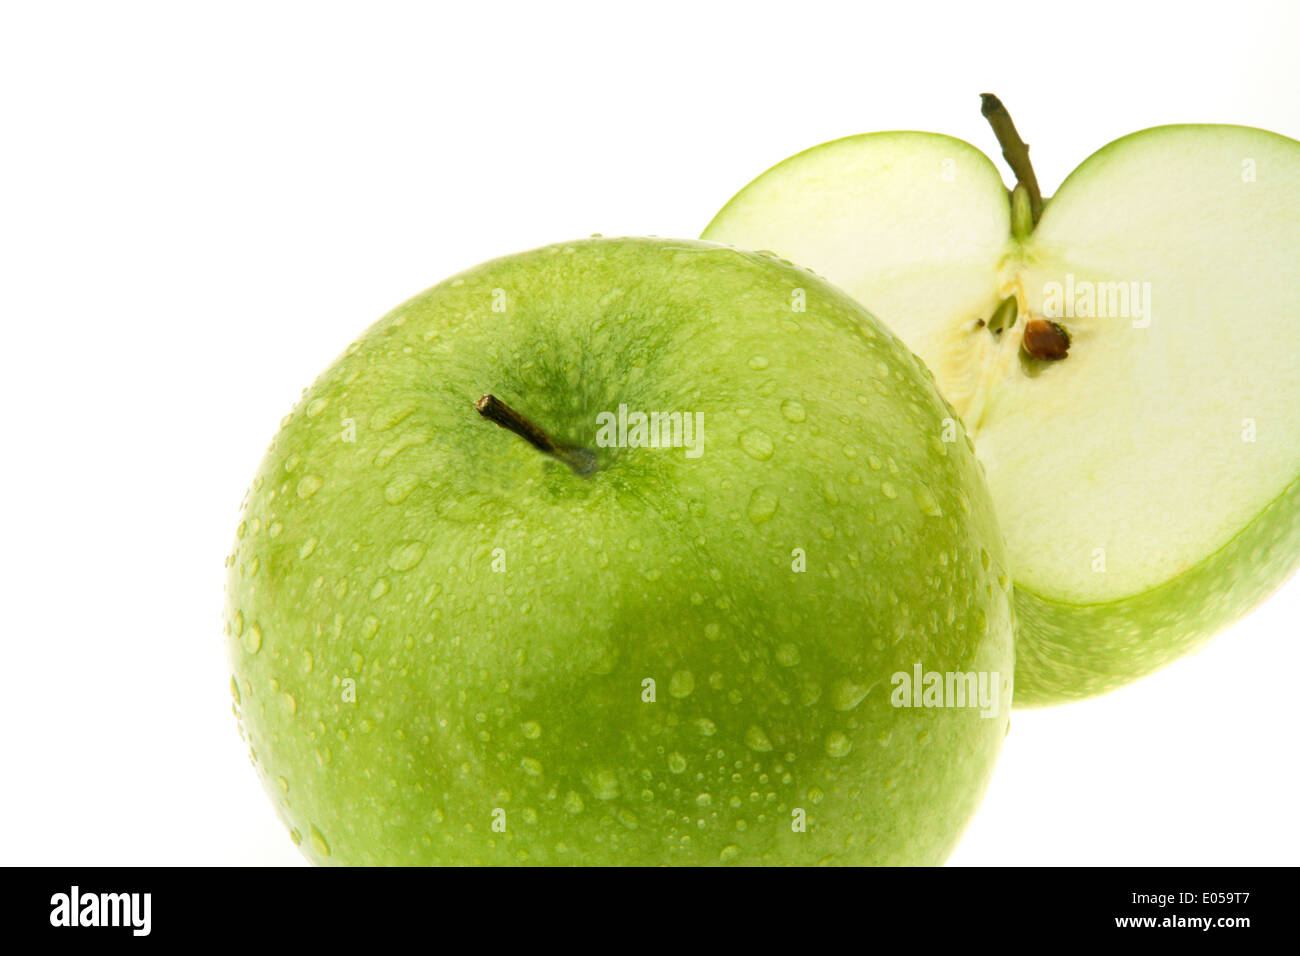 A green apple. Fruit for vitamins., Ein gruener Apfel. Obst fuer Vitamine. Stock Photo